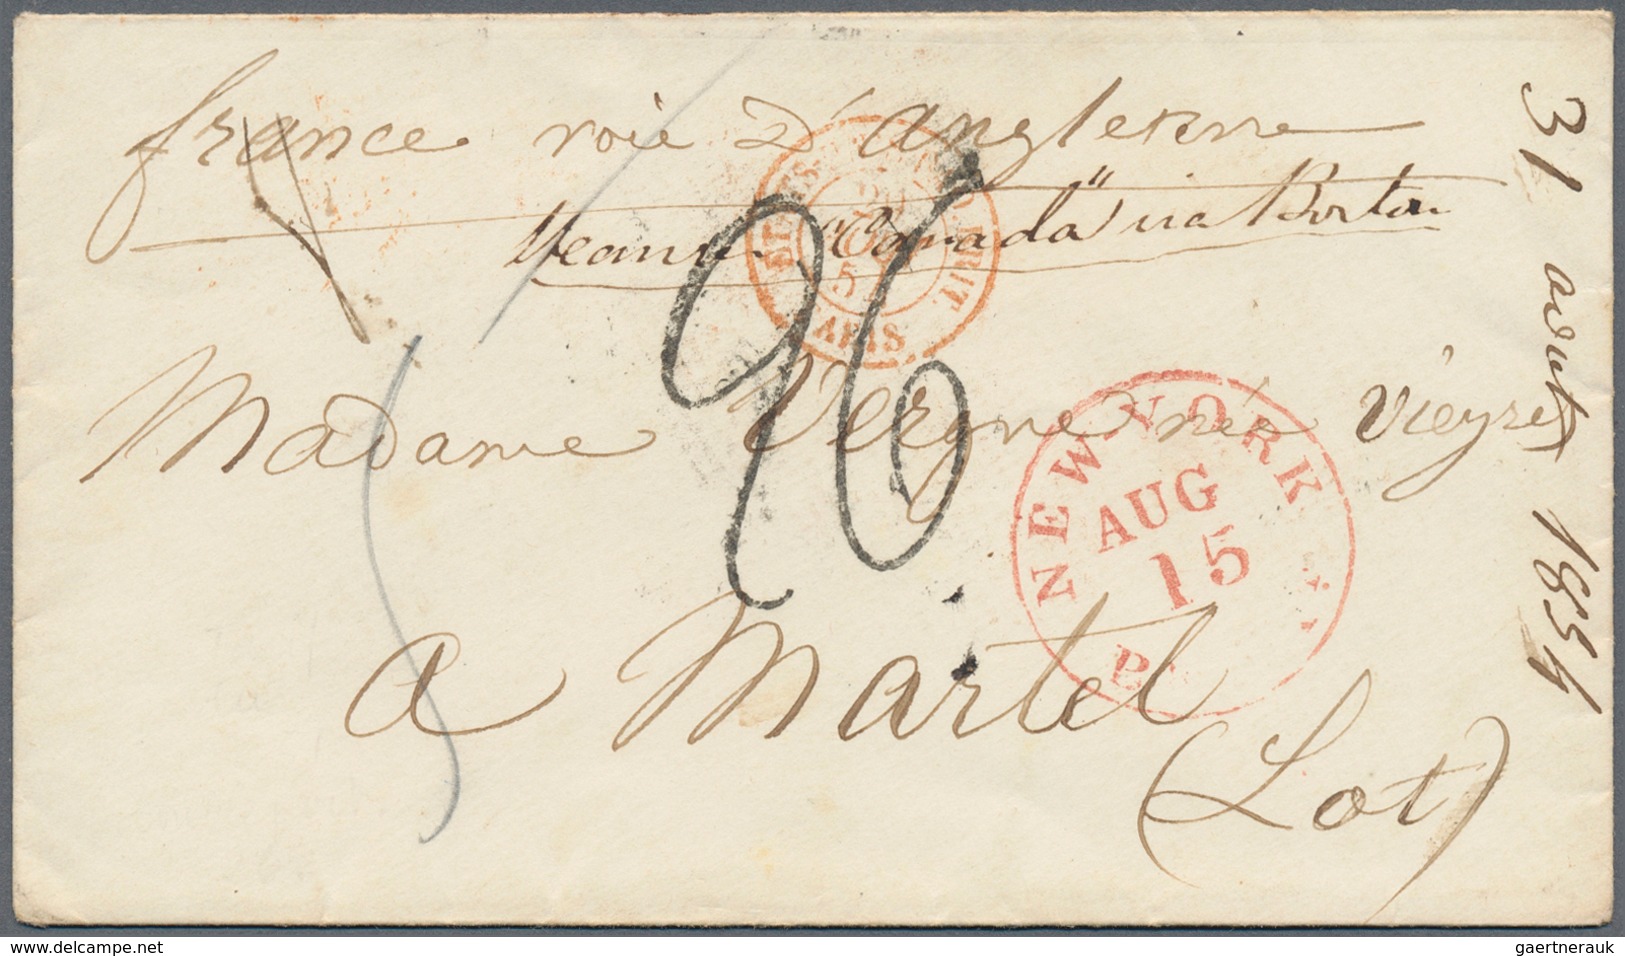 24351 Vereinigte Staaten von Amerika: 1838/1933: Lot of 28 envelopes and postal stationeries including pre